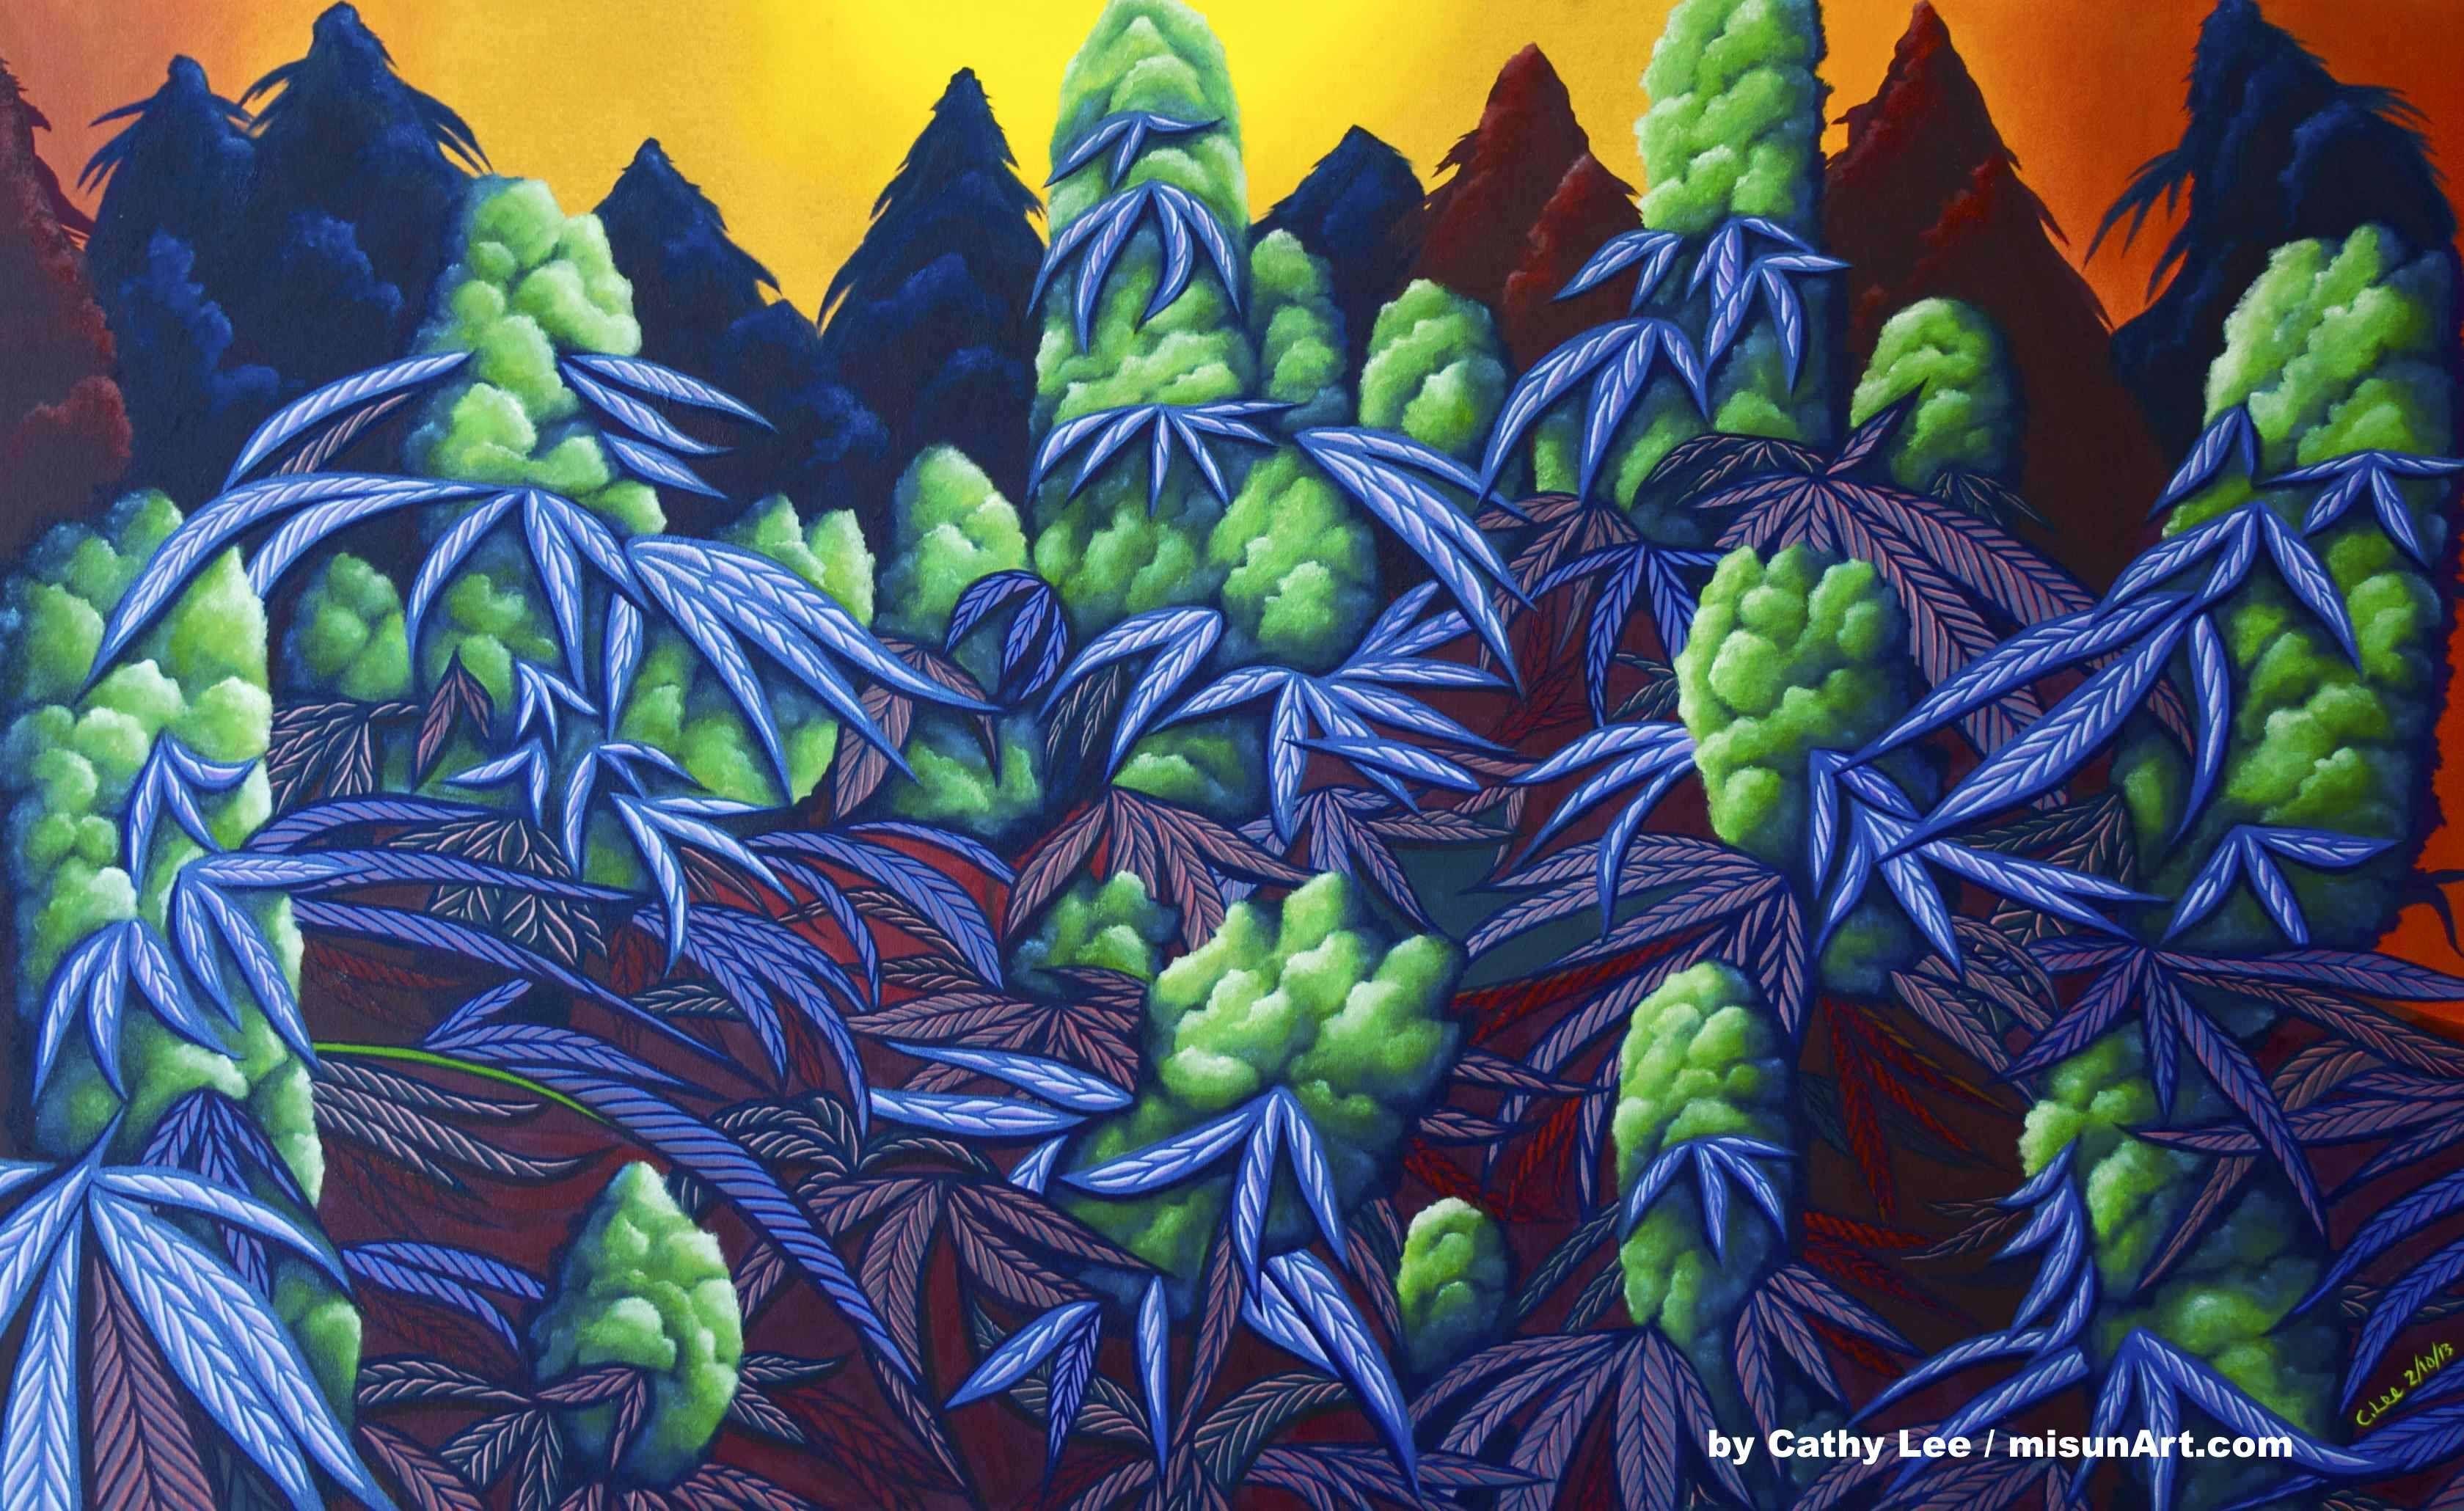 420 marijuana weed drugs art artwork psychedelic wallpapers.